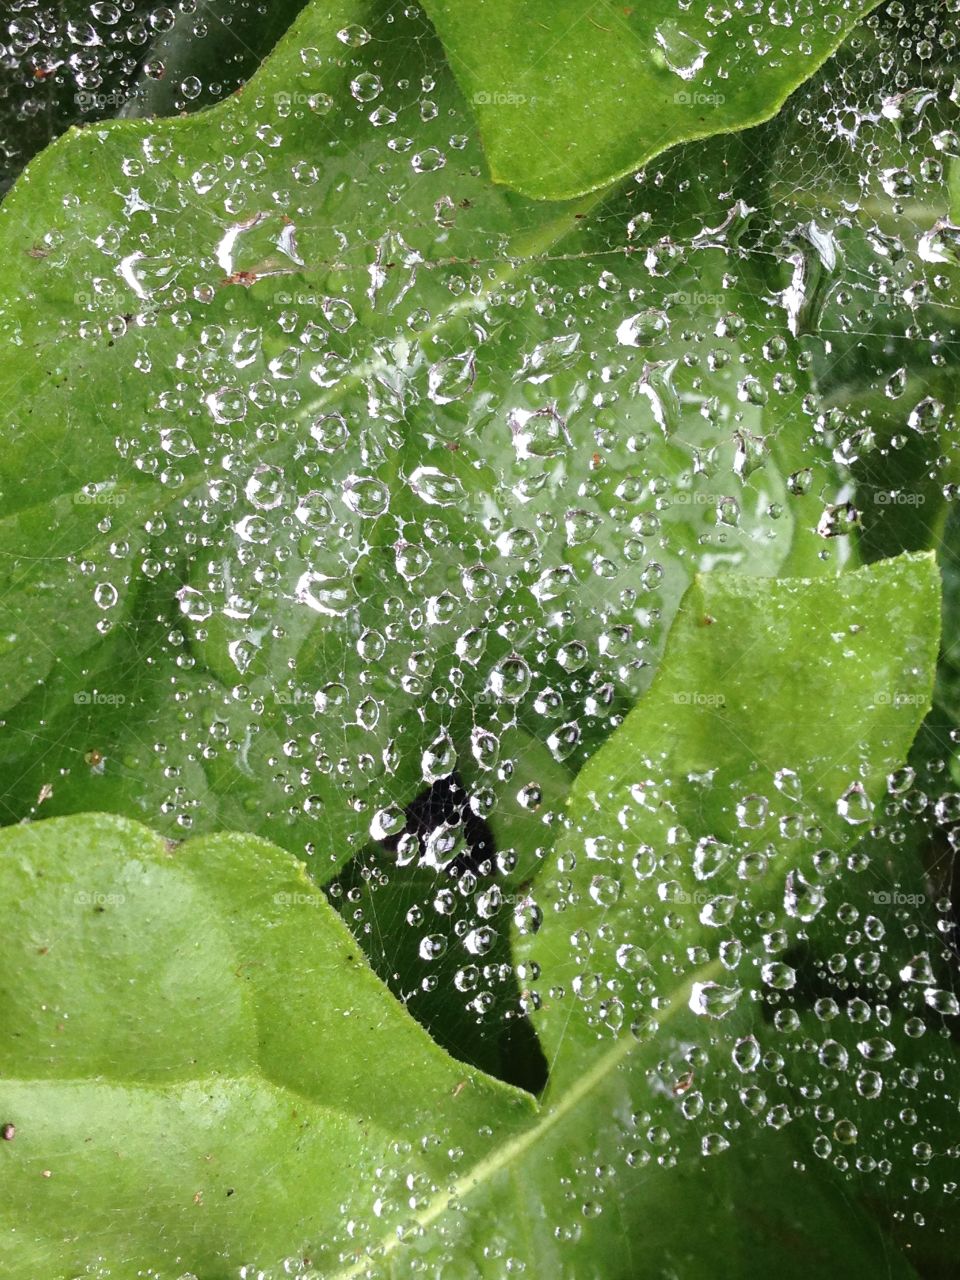 Spiderweb raindrops 3